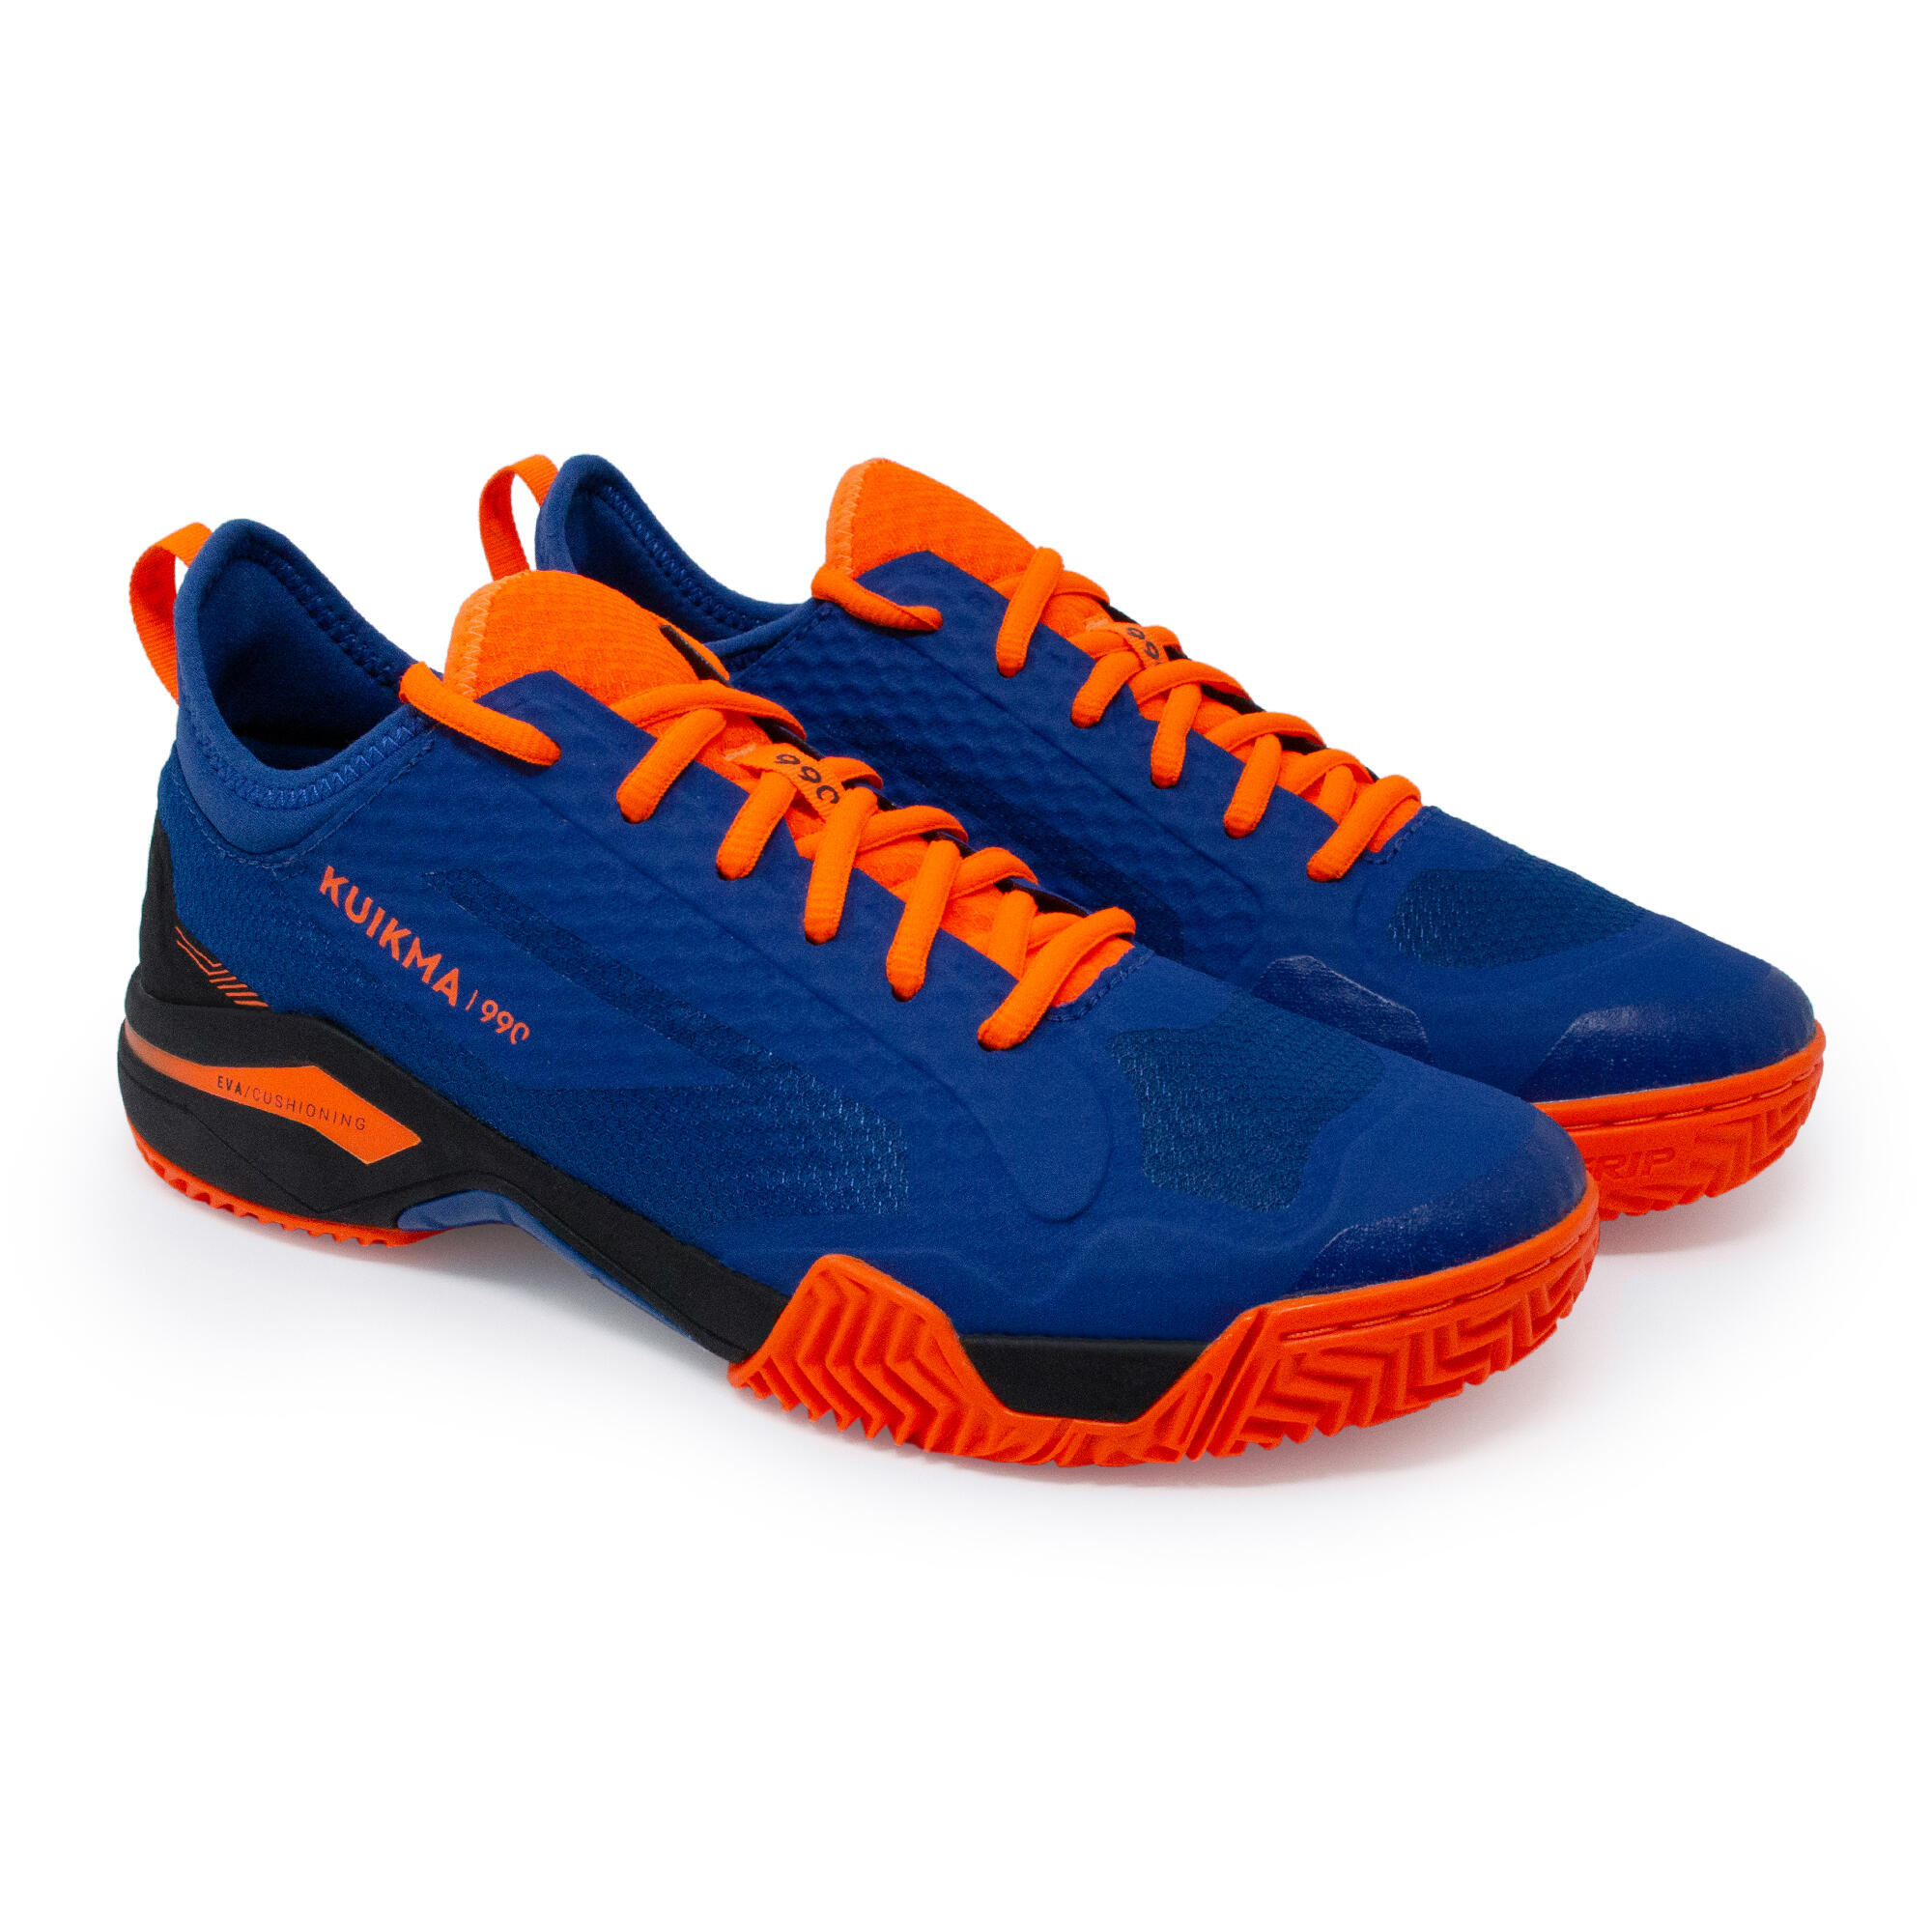 Men's Padel Shoes PS 990 Dynamic - Blue/Orange 8/16